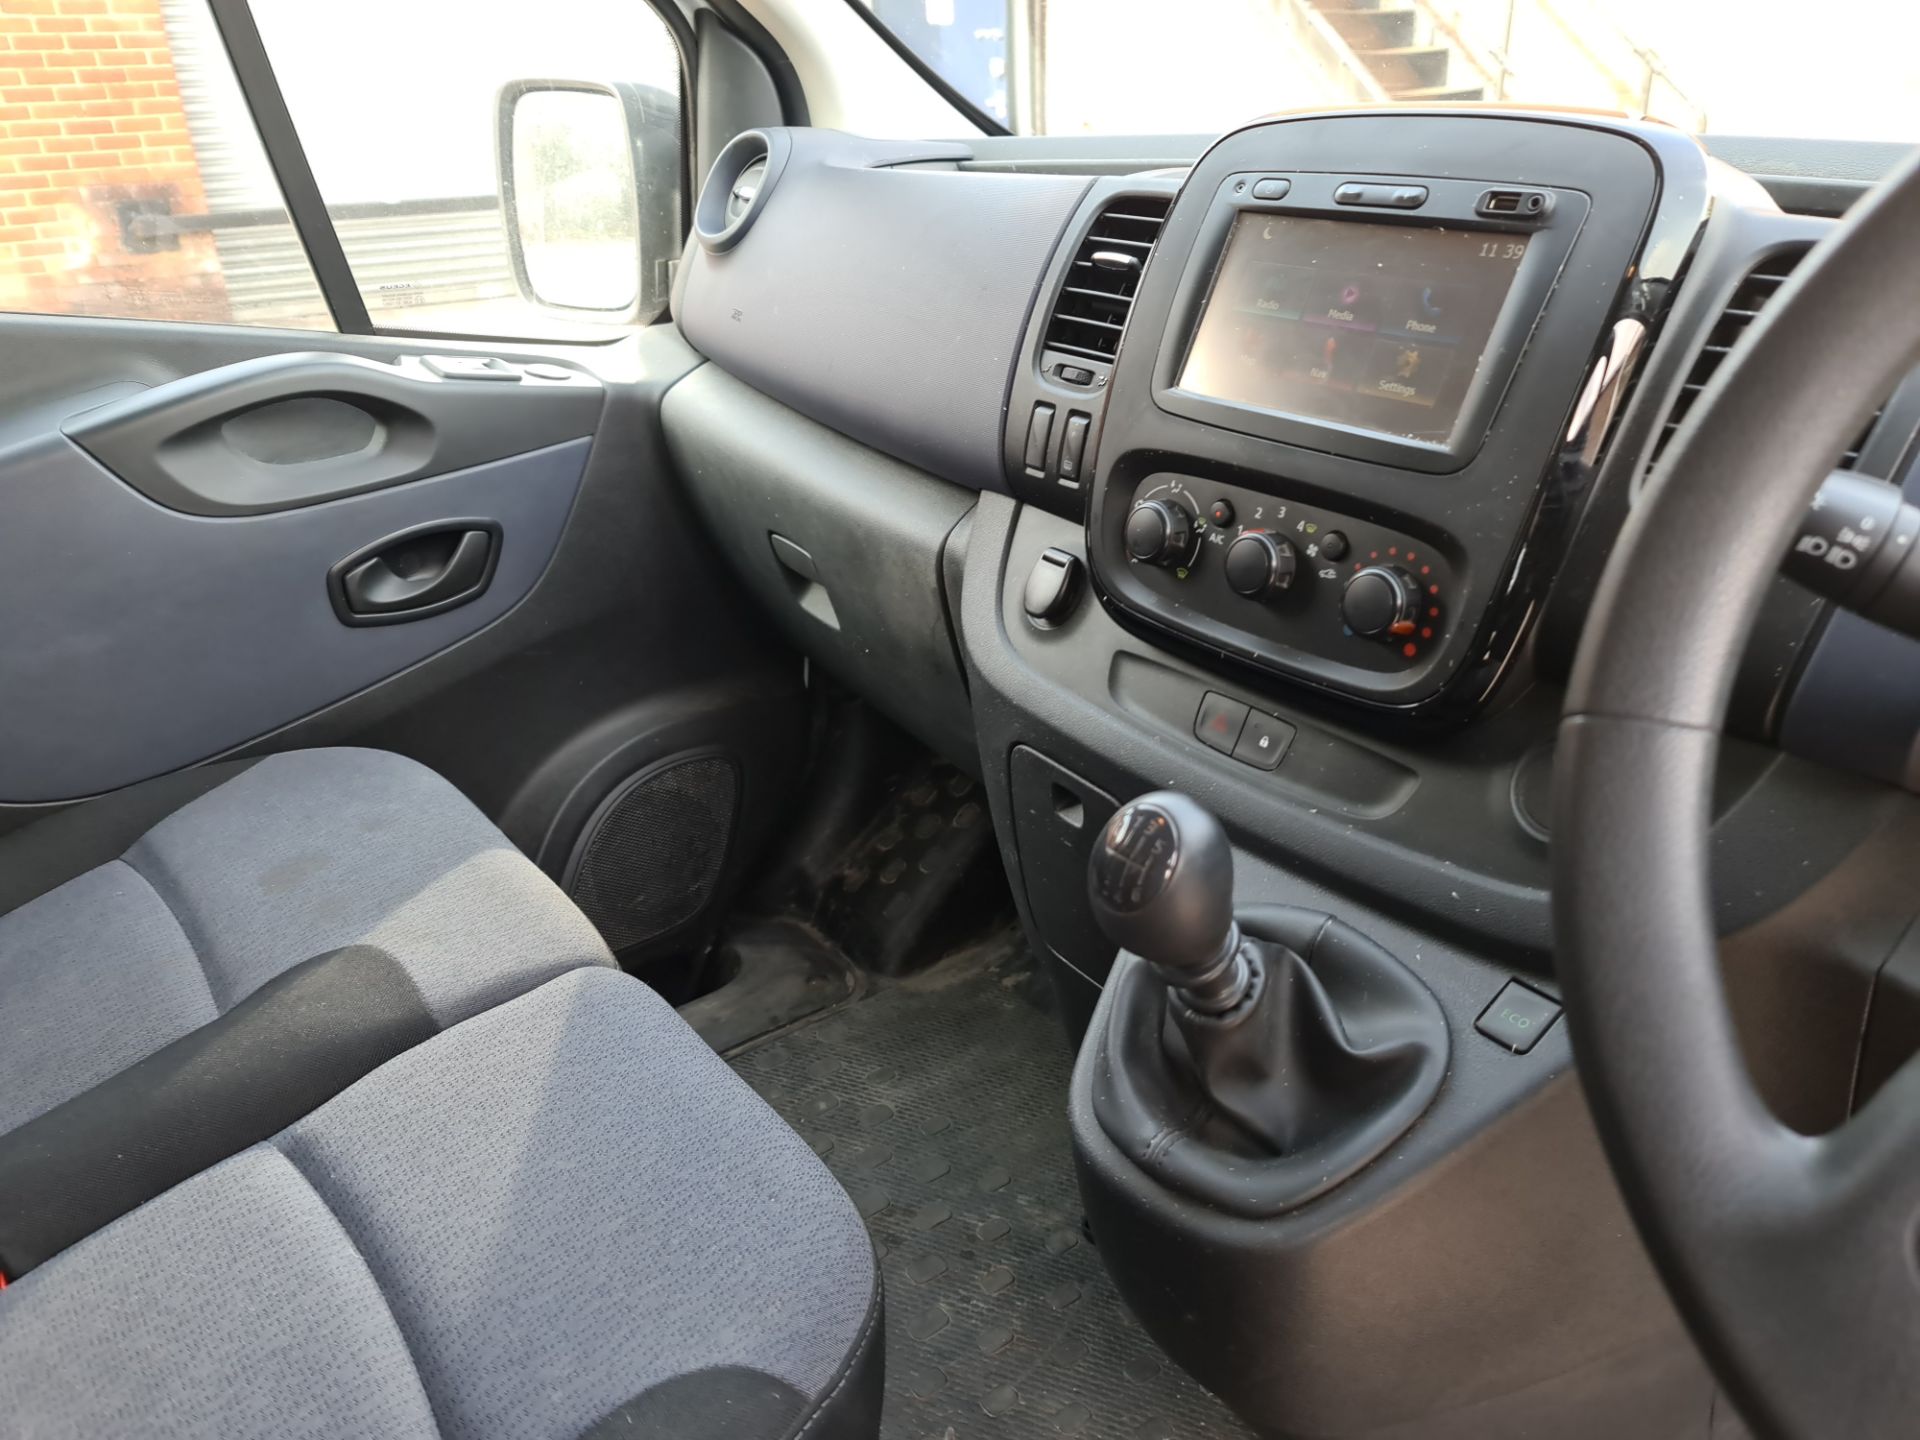 VX17 UOL Vauxhall Vivaro 2900 CDTI panel van, 6-speed manual gearbox, 1598cc diesel engine. Colour: - Image 16 of 49